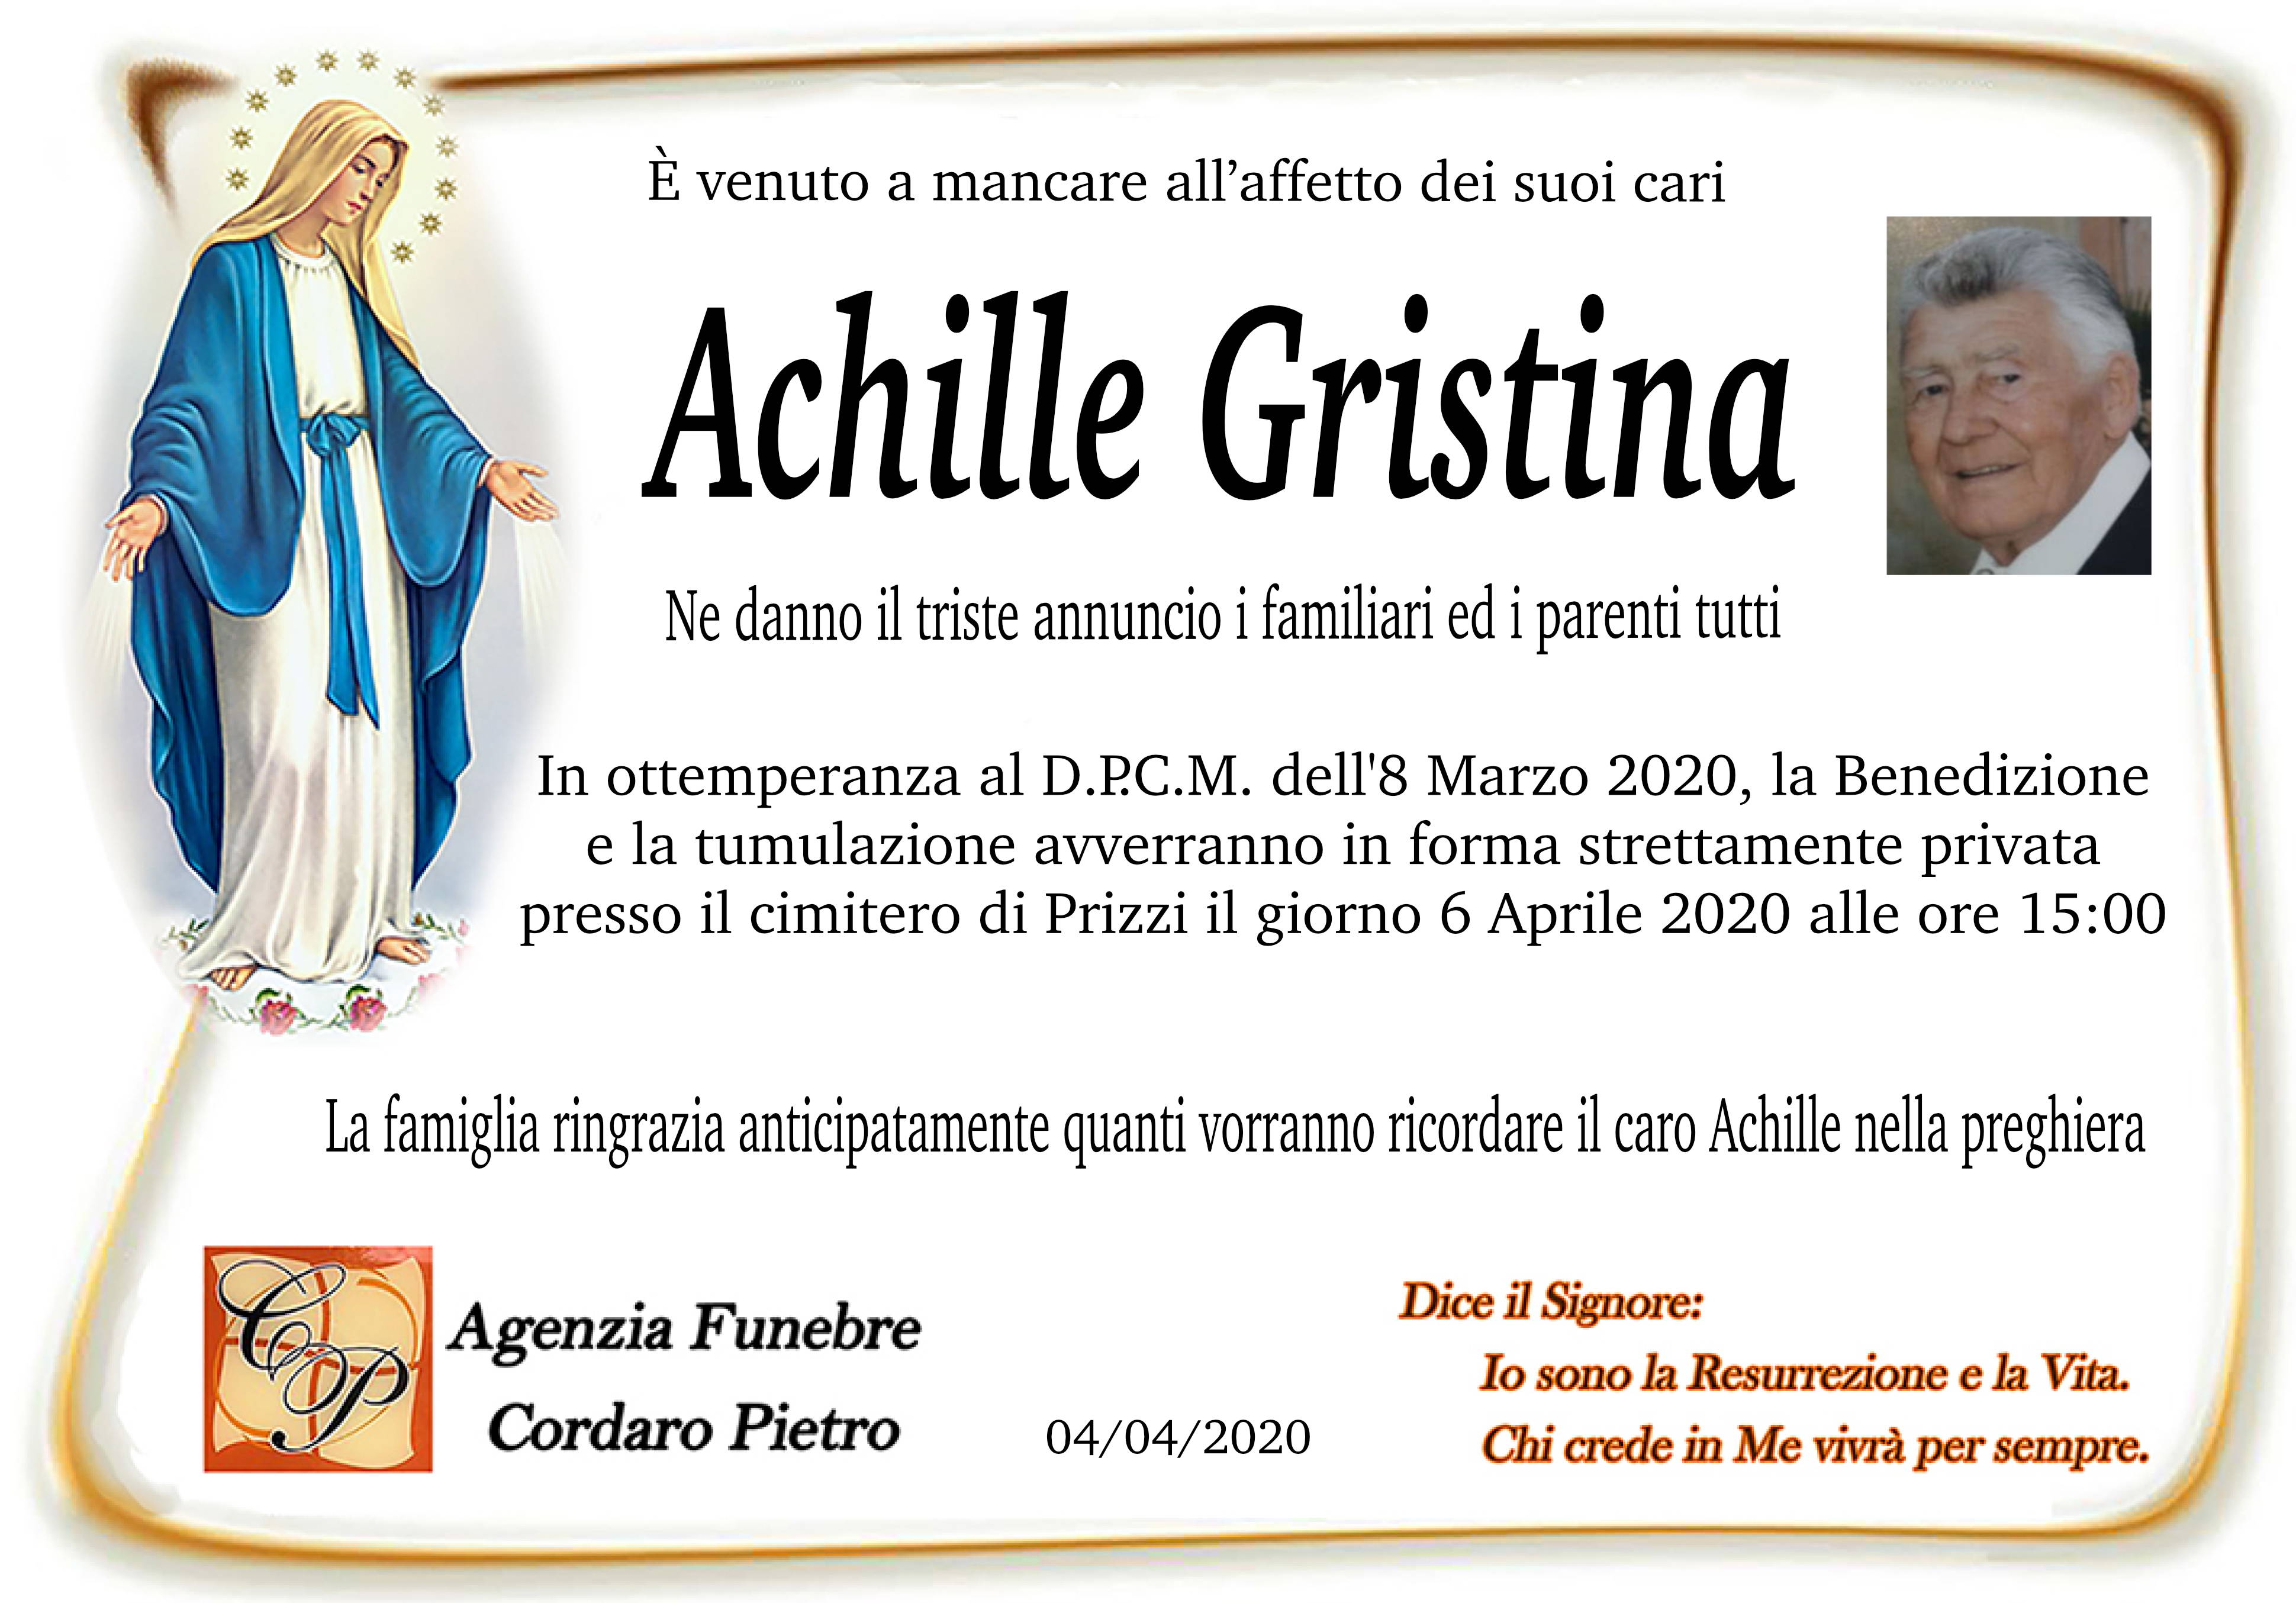 Achille Gristina